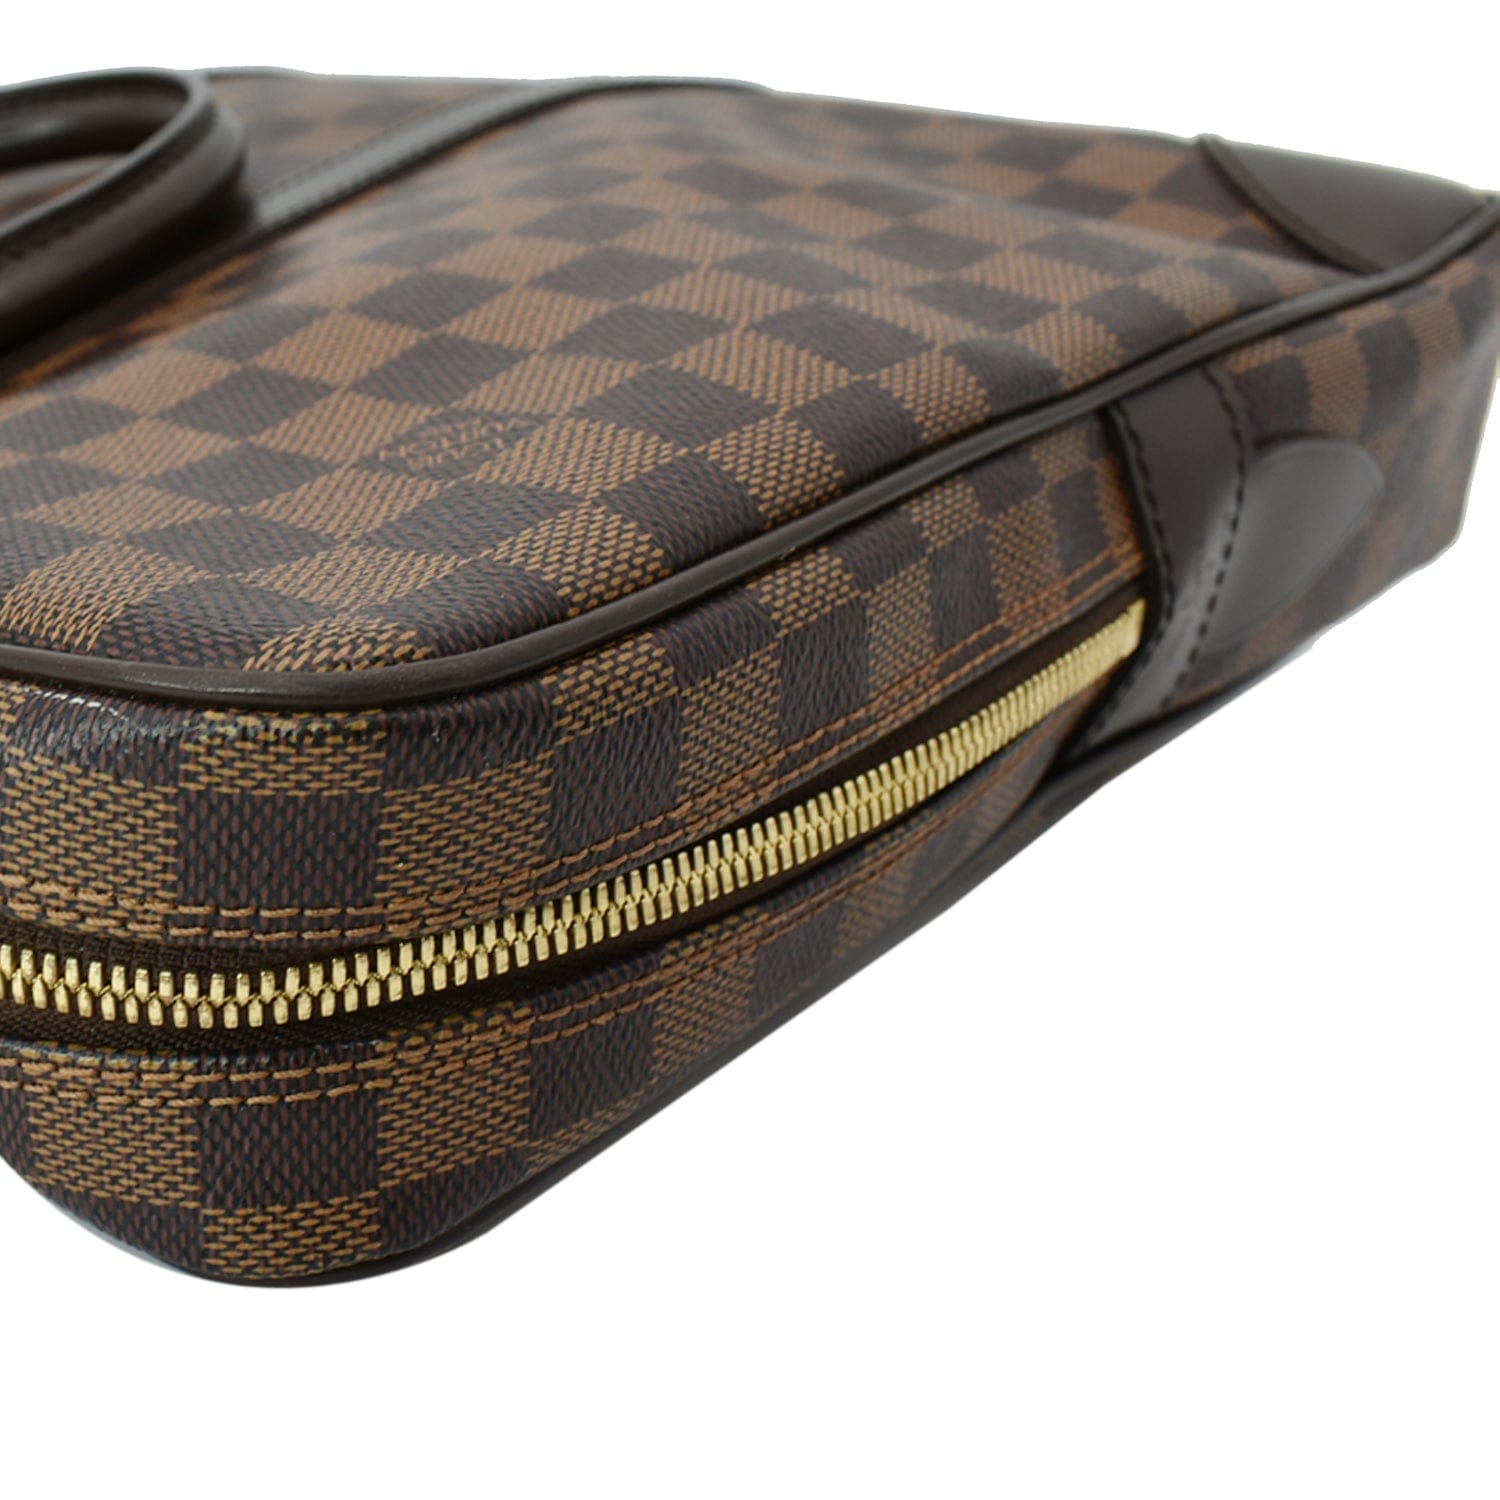 Louis Vuitton Damier Ebene Porte-Documents Jour NM - Brown Luggage